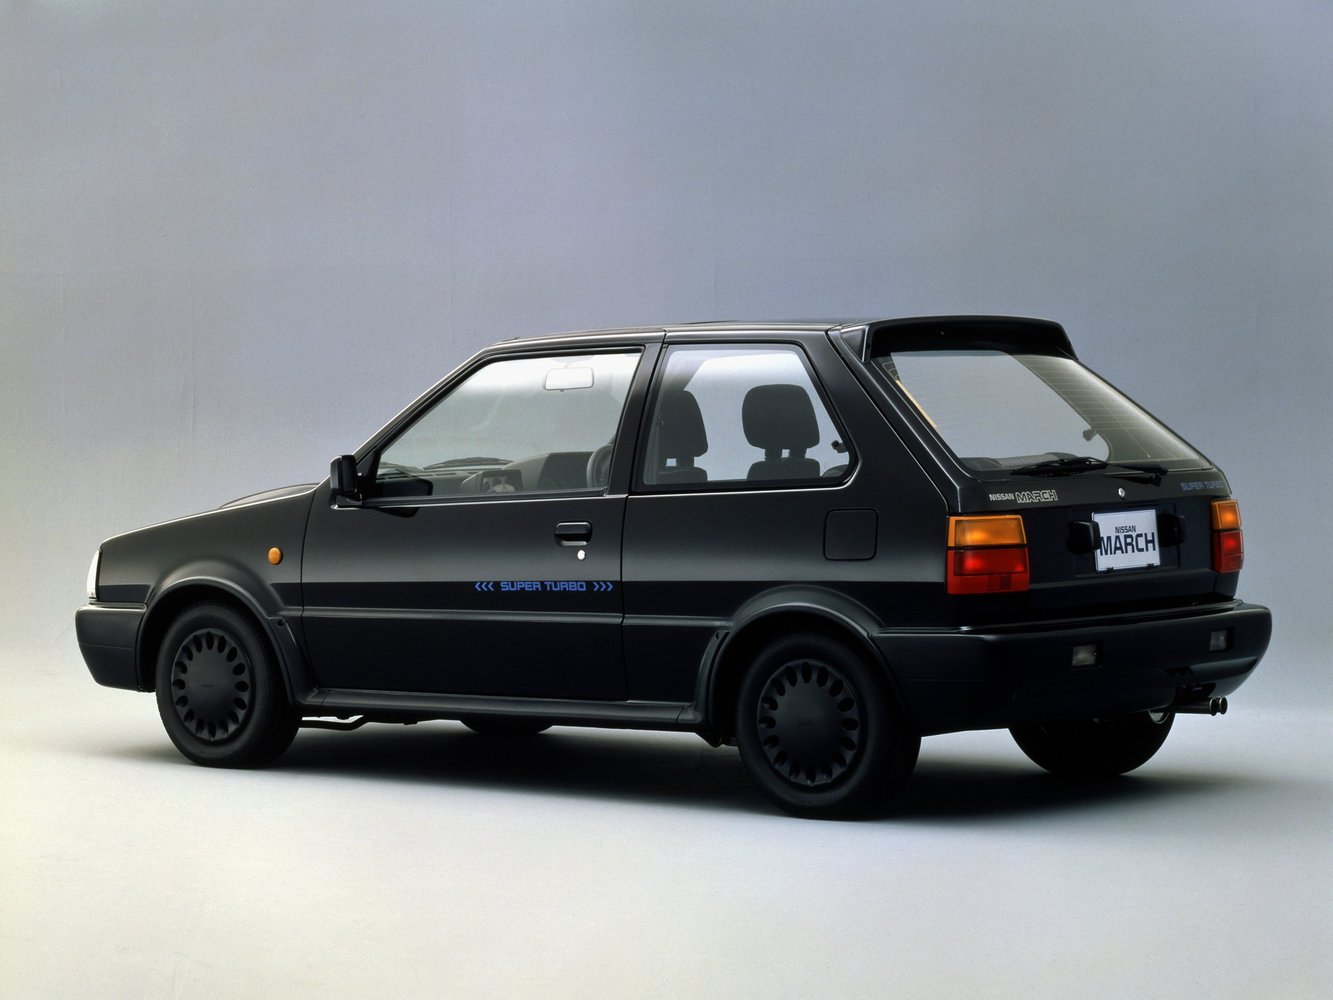 хэтчбек 3 дв. Nissan March 1982 - 1991г выпуска модификация 0.9 AT (110 л.с.)